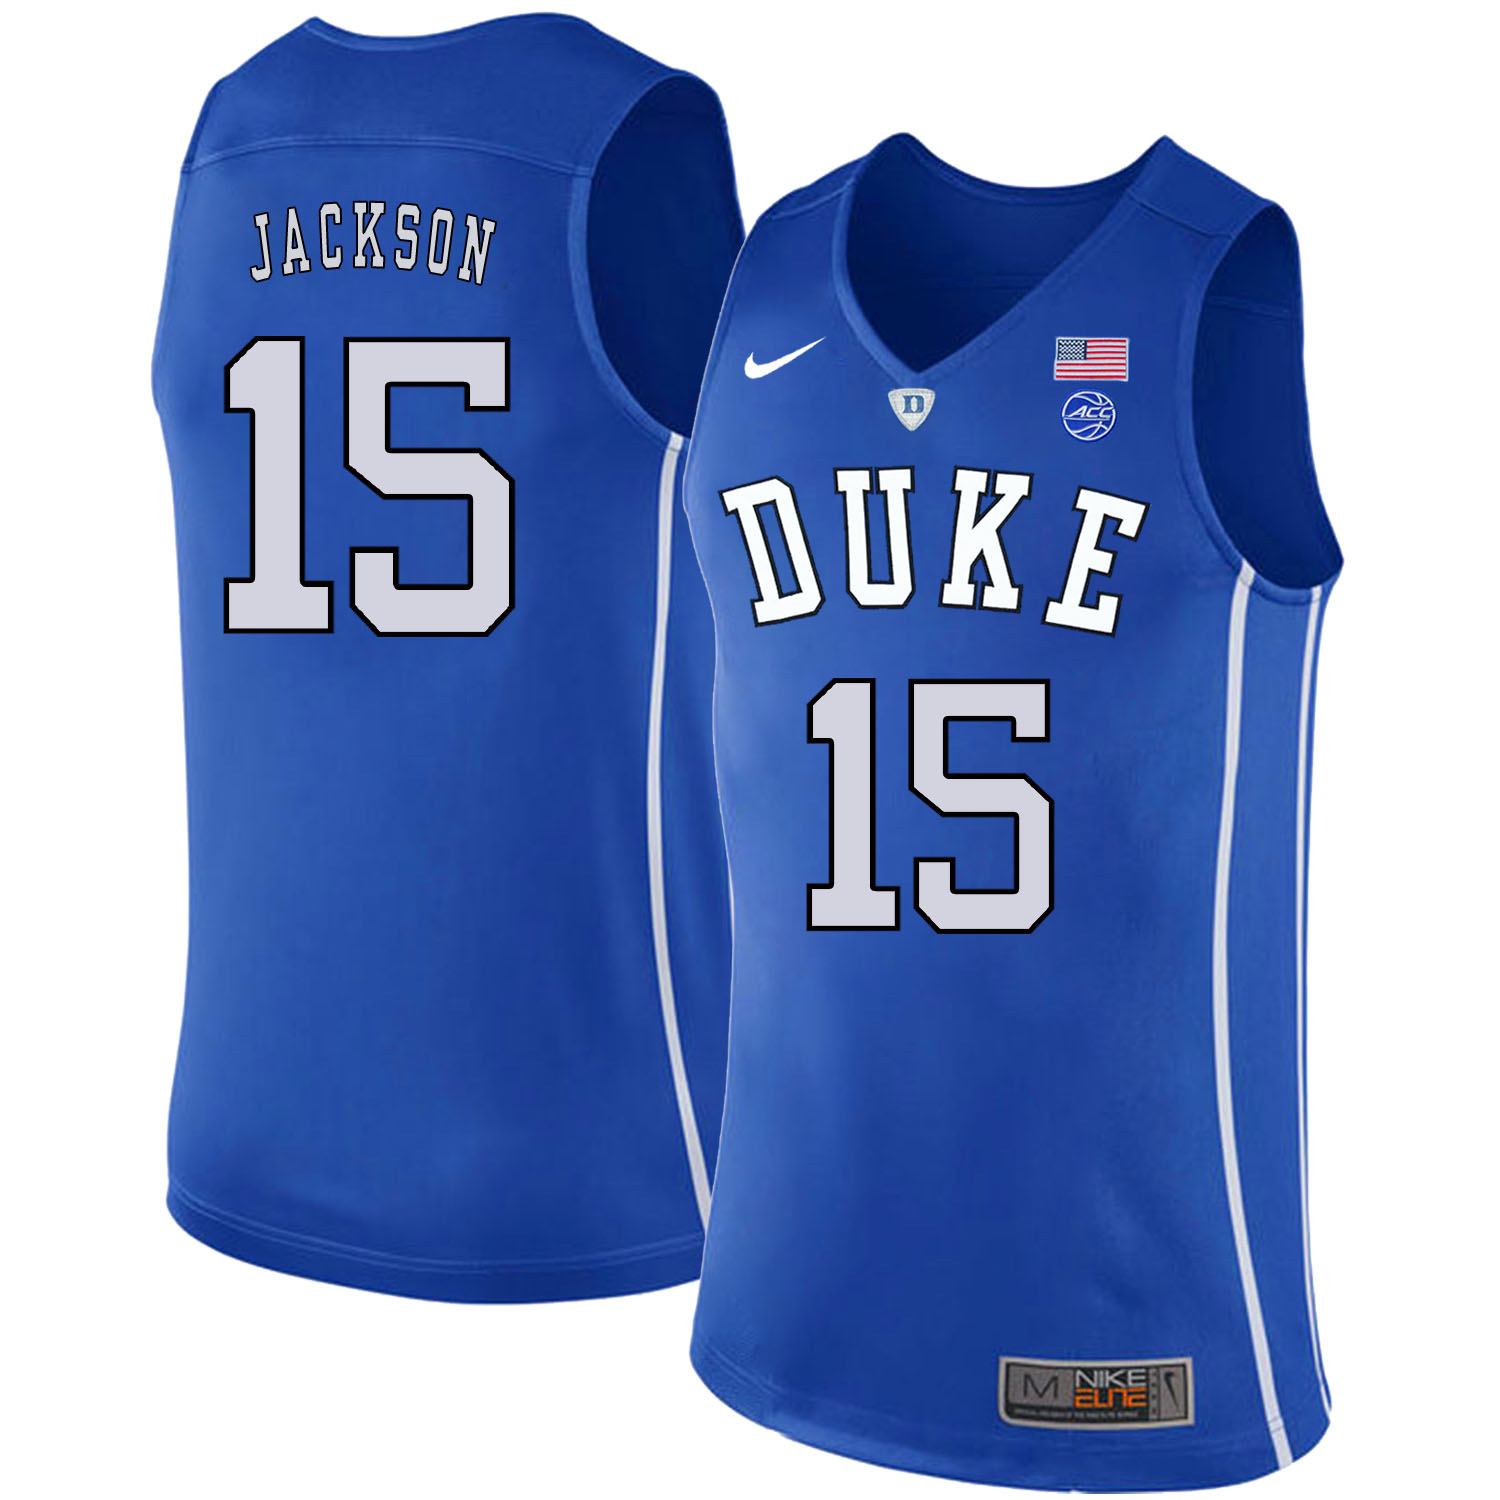 Duke Blue Devils 15 Frank Jackson Blue Nike College Basketball Jersey